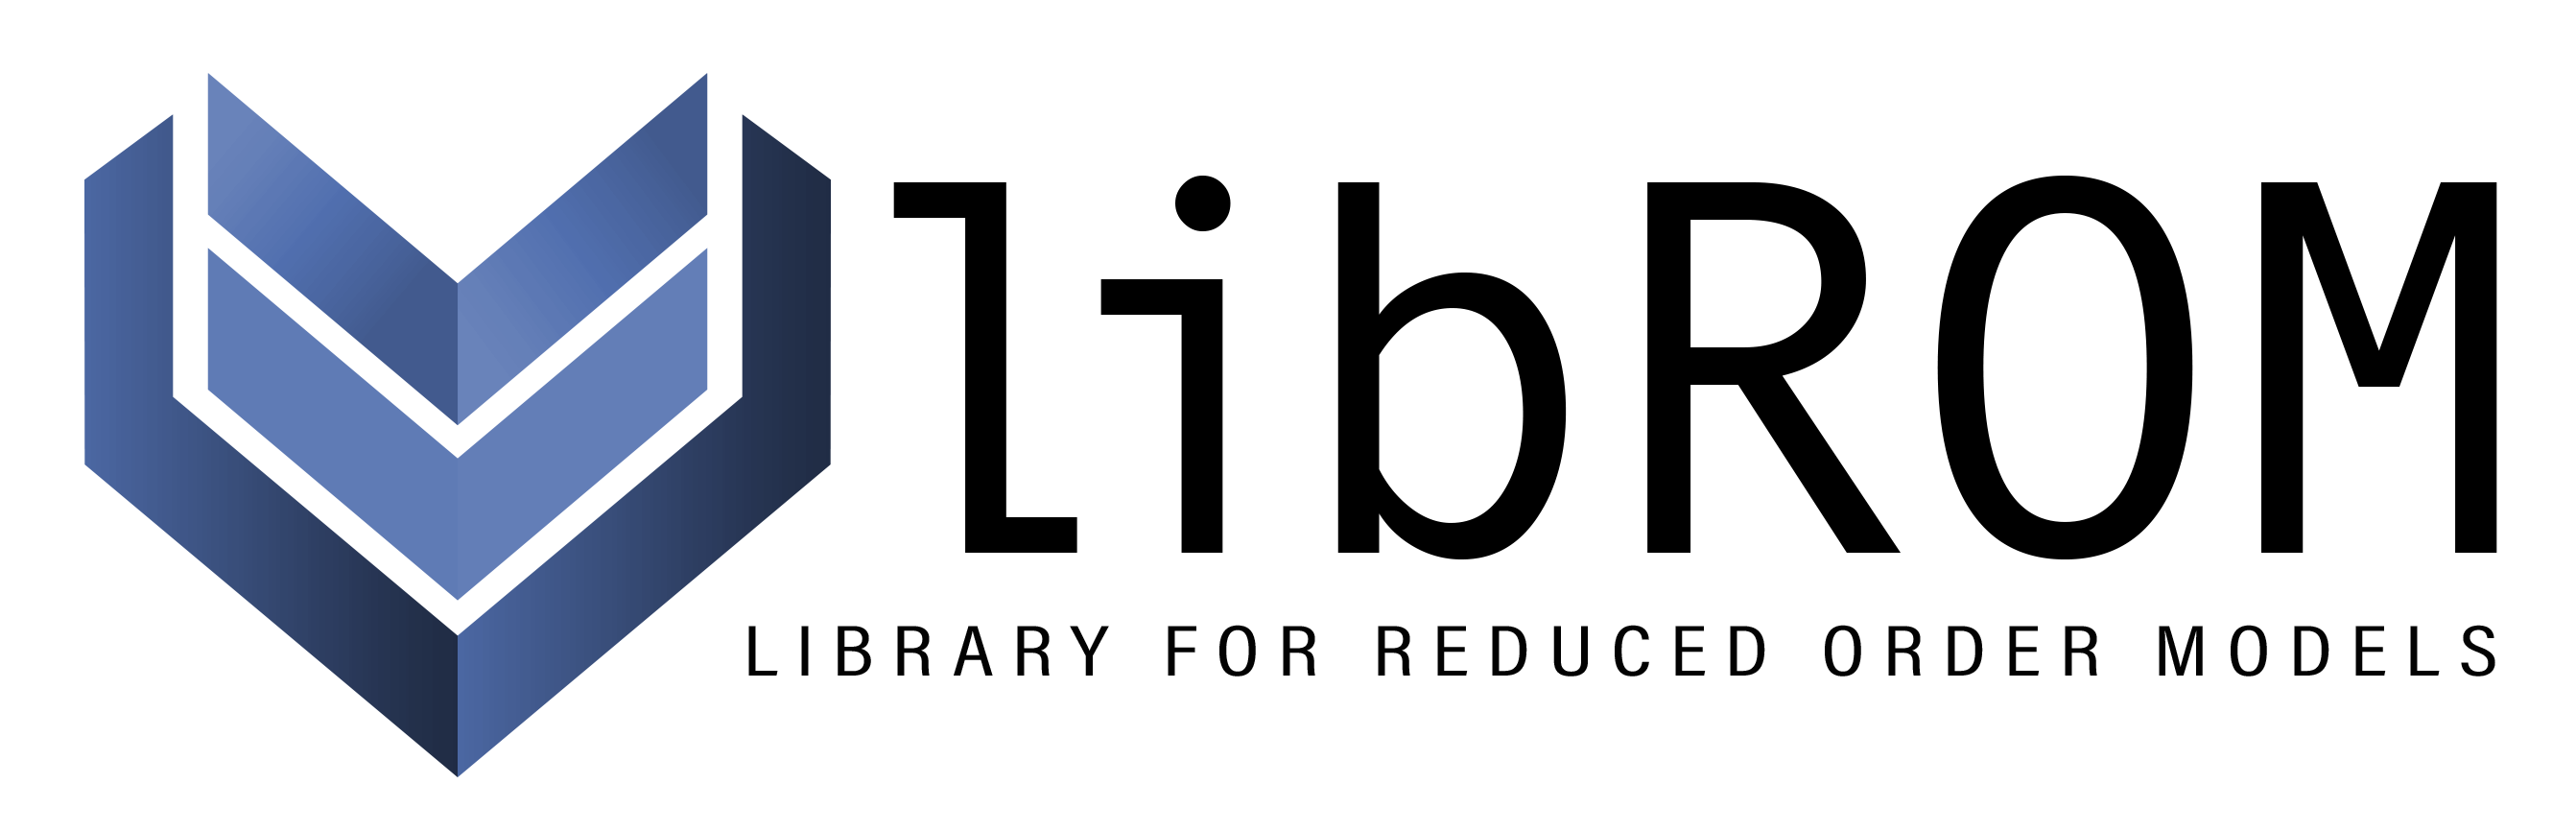 libROM logo